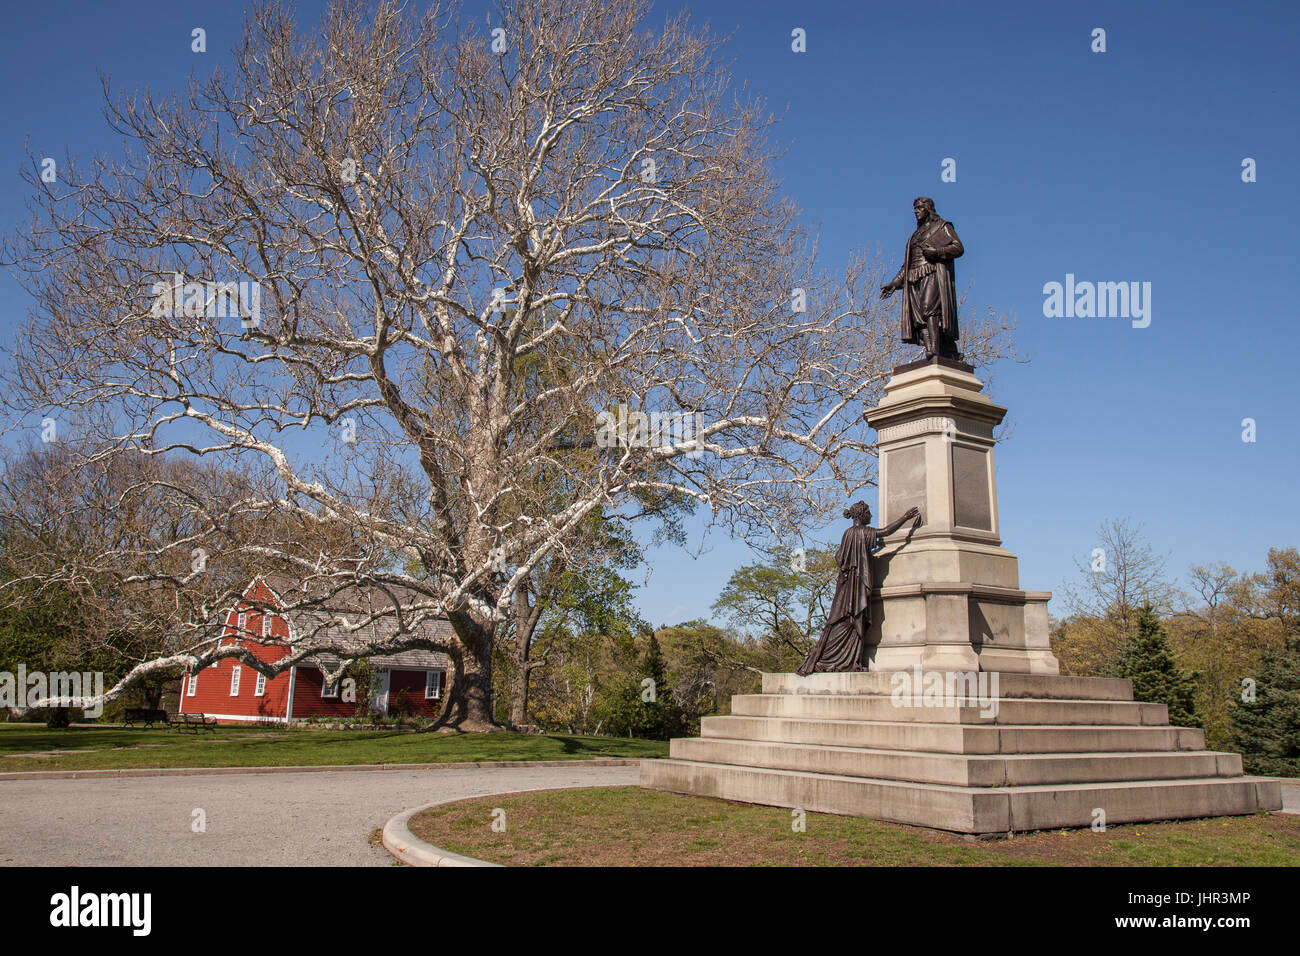 Le Roger Williams monument à Providence, Rhode Island Banque D'Images